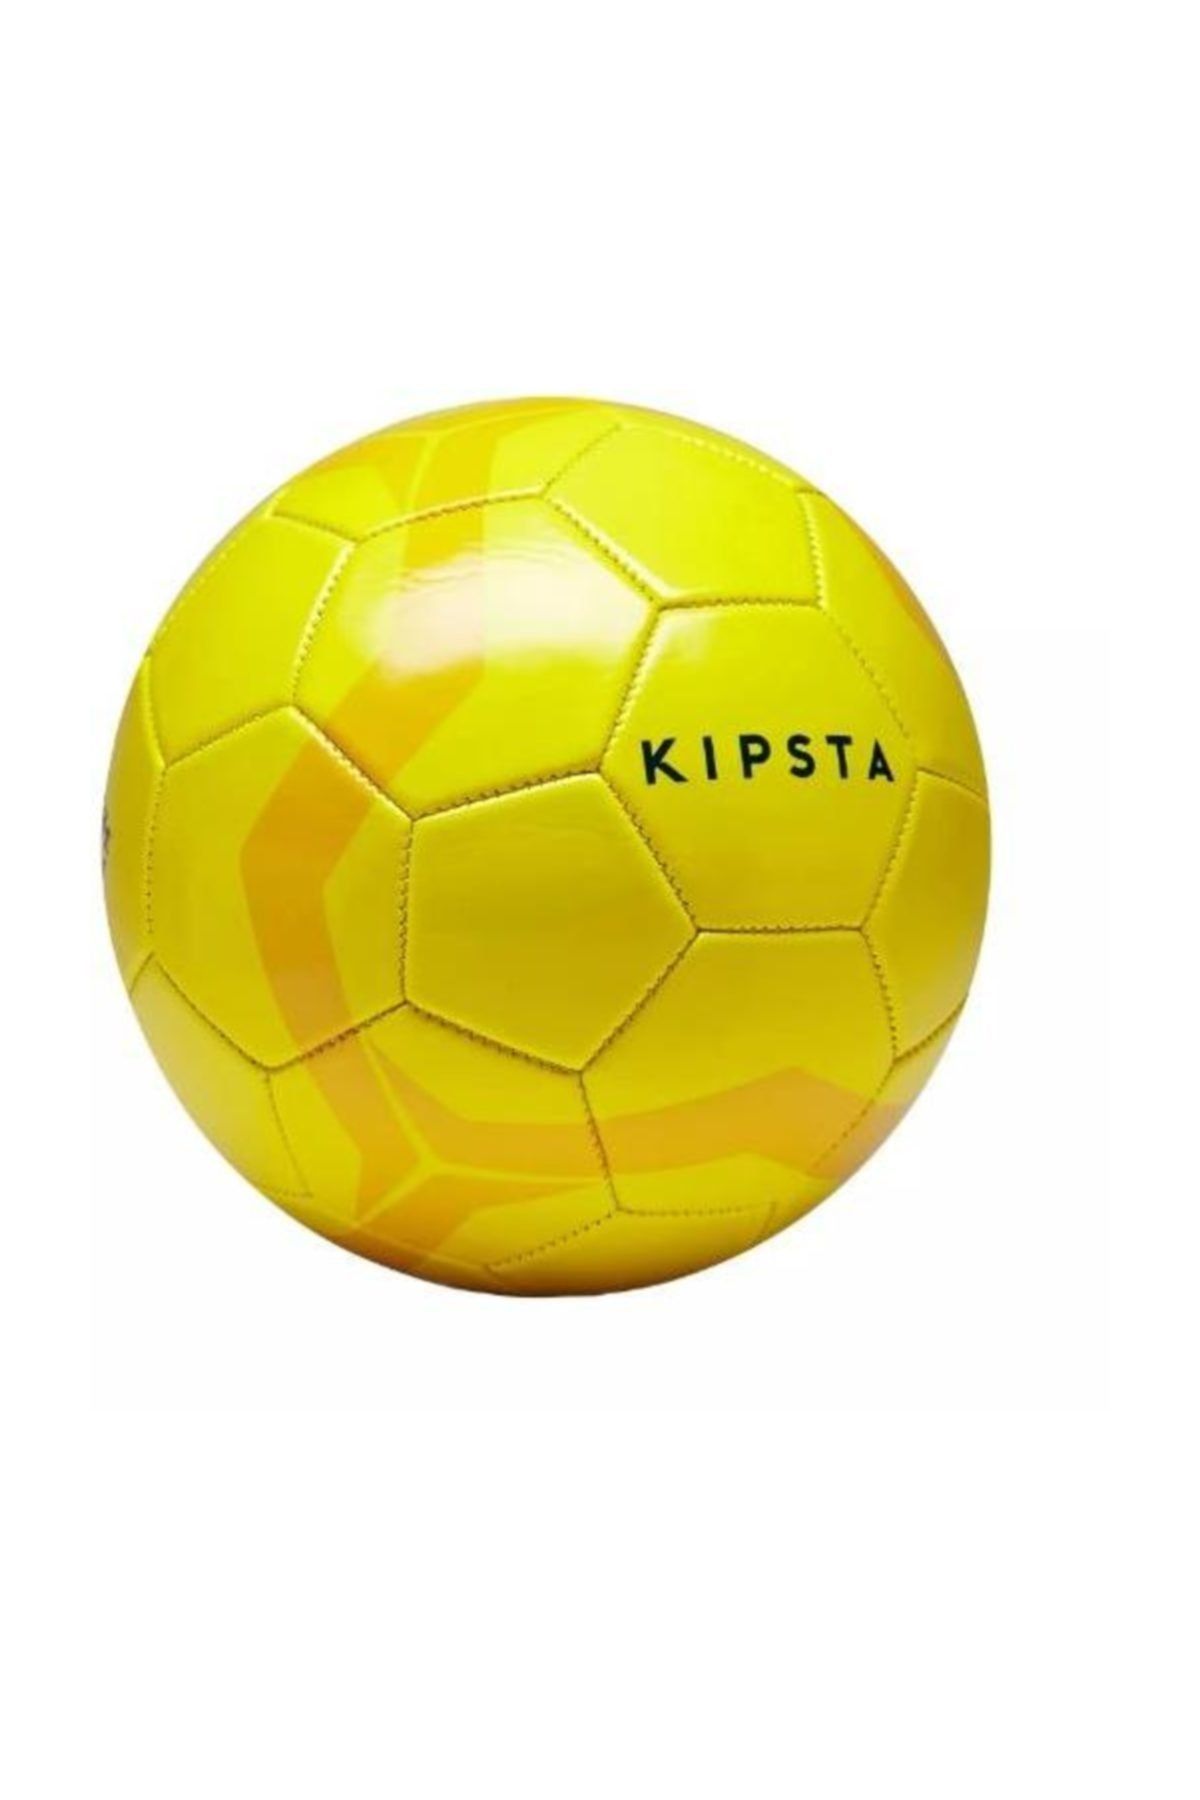 kipsta - First Kick 4 Numara 8 12 Yaş Futbol Topu Sarı